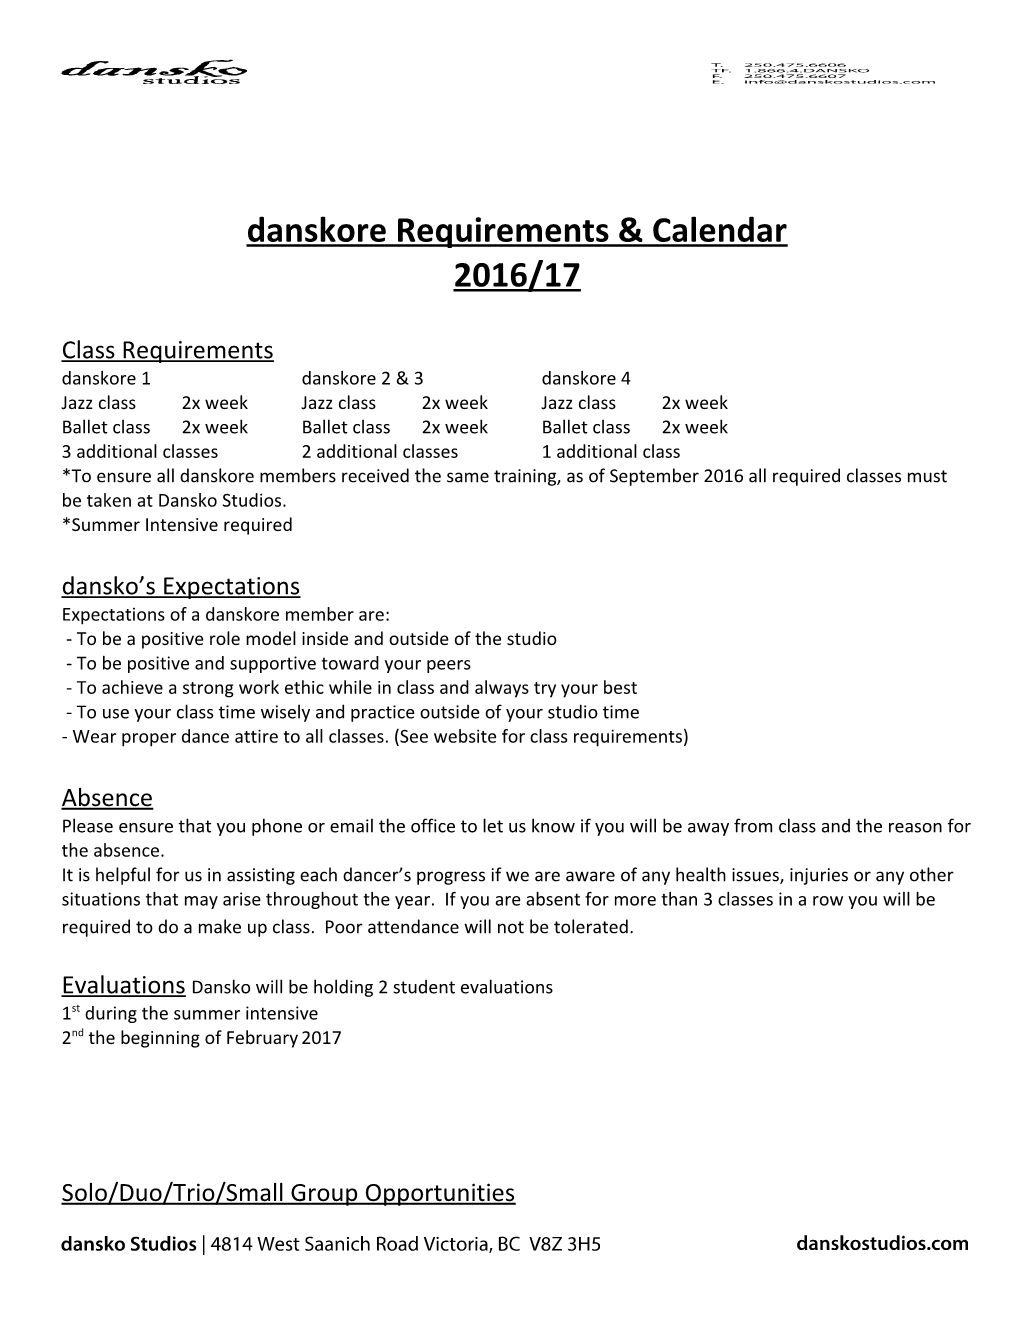 Danskore Requirements & Calendar